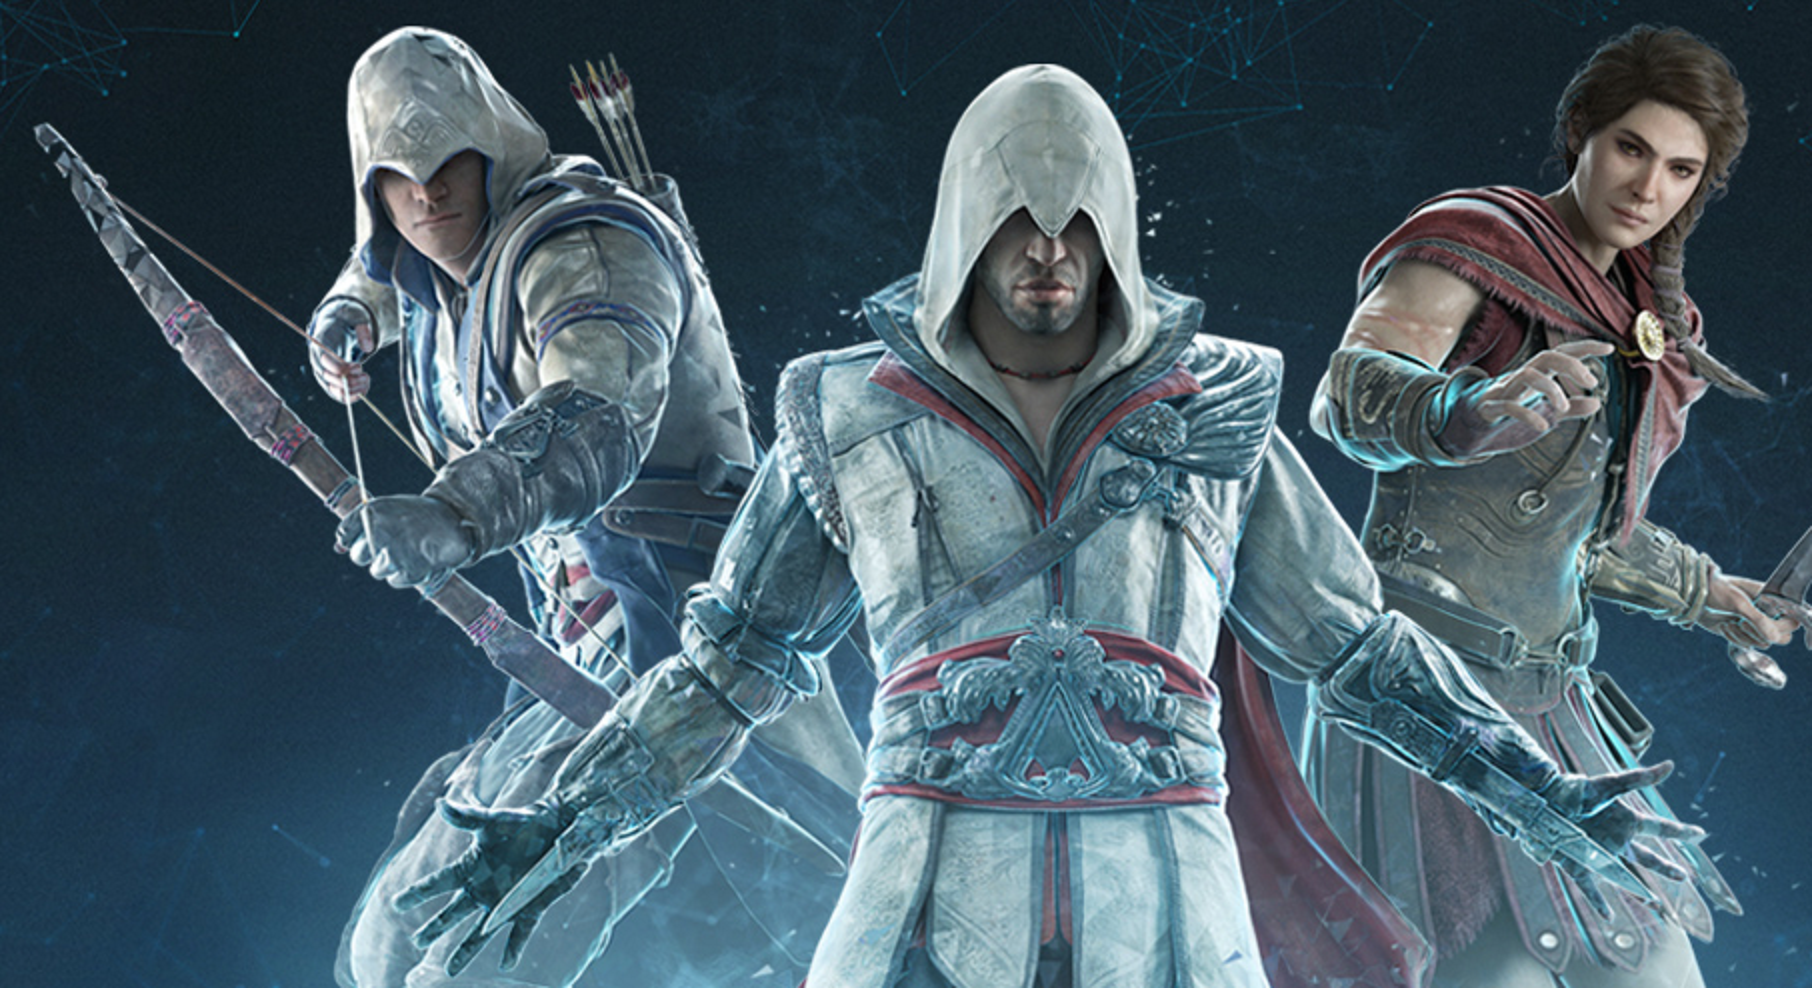 Assassin’s Creed Nexus VR está protagonizado por tres Asesinos icónicos